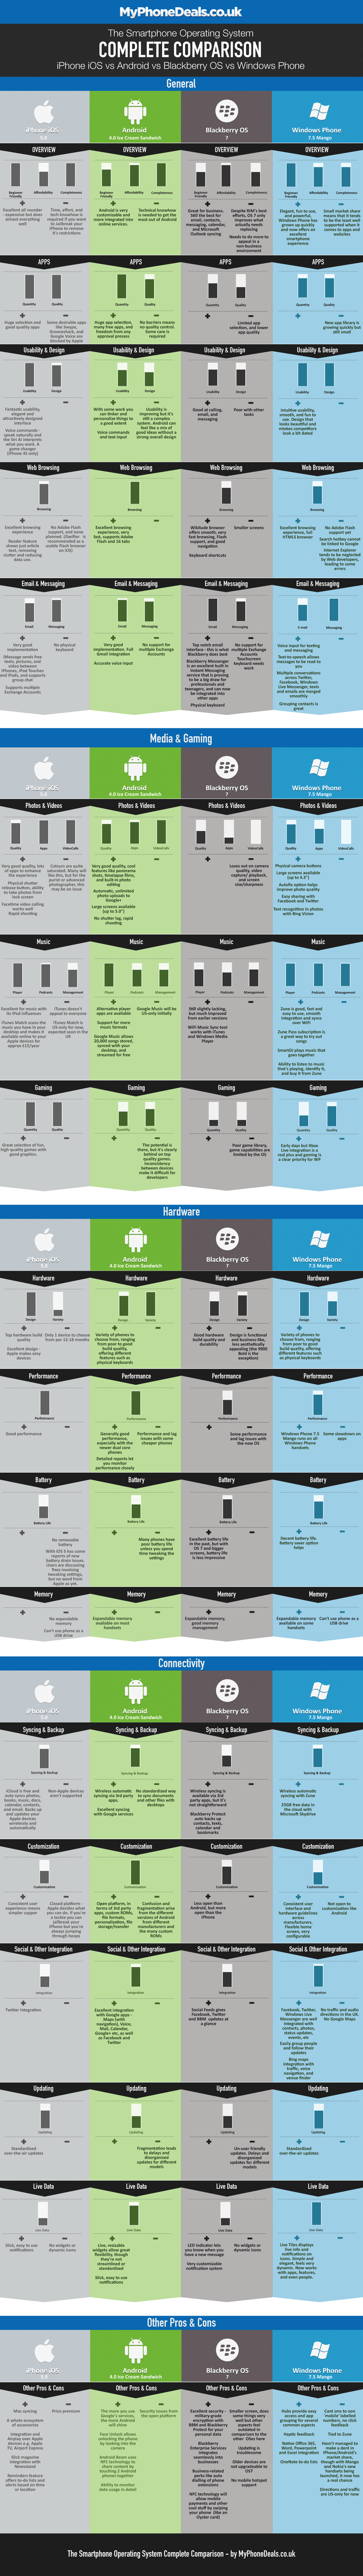 smartphone-os-complete-comparison-chart